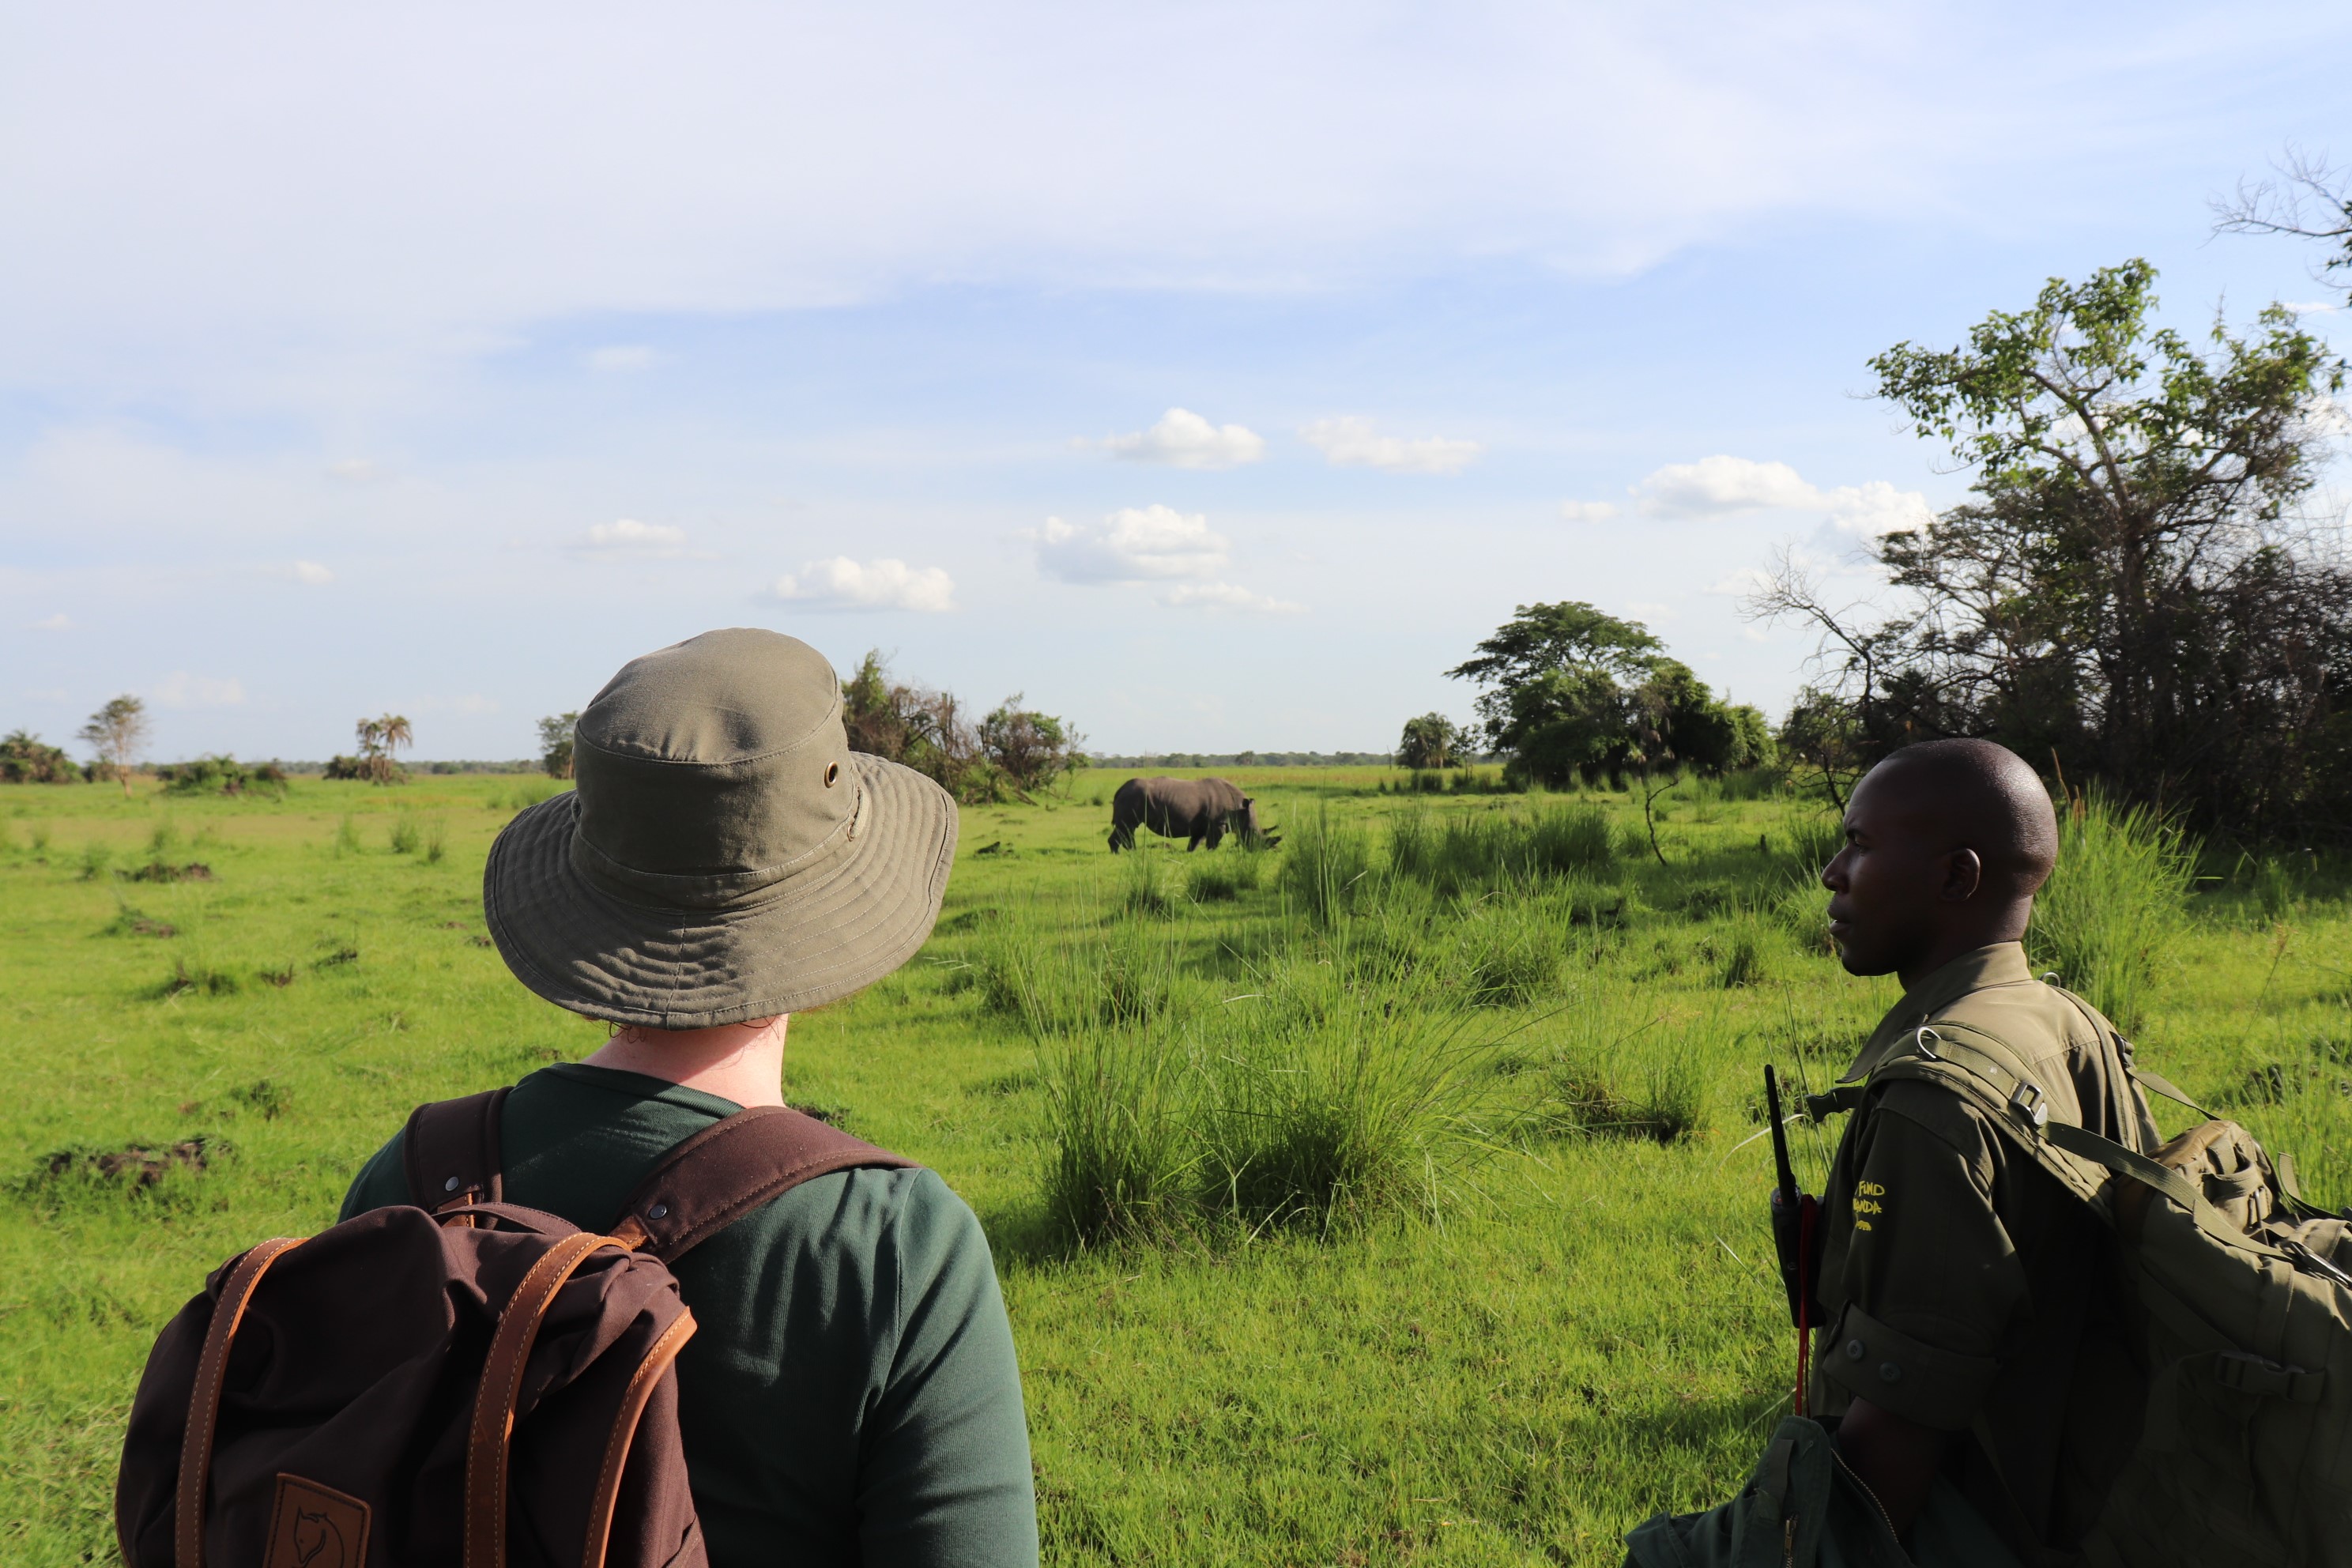 Wills and her ranger looking at rhinos at Ziwa